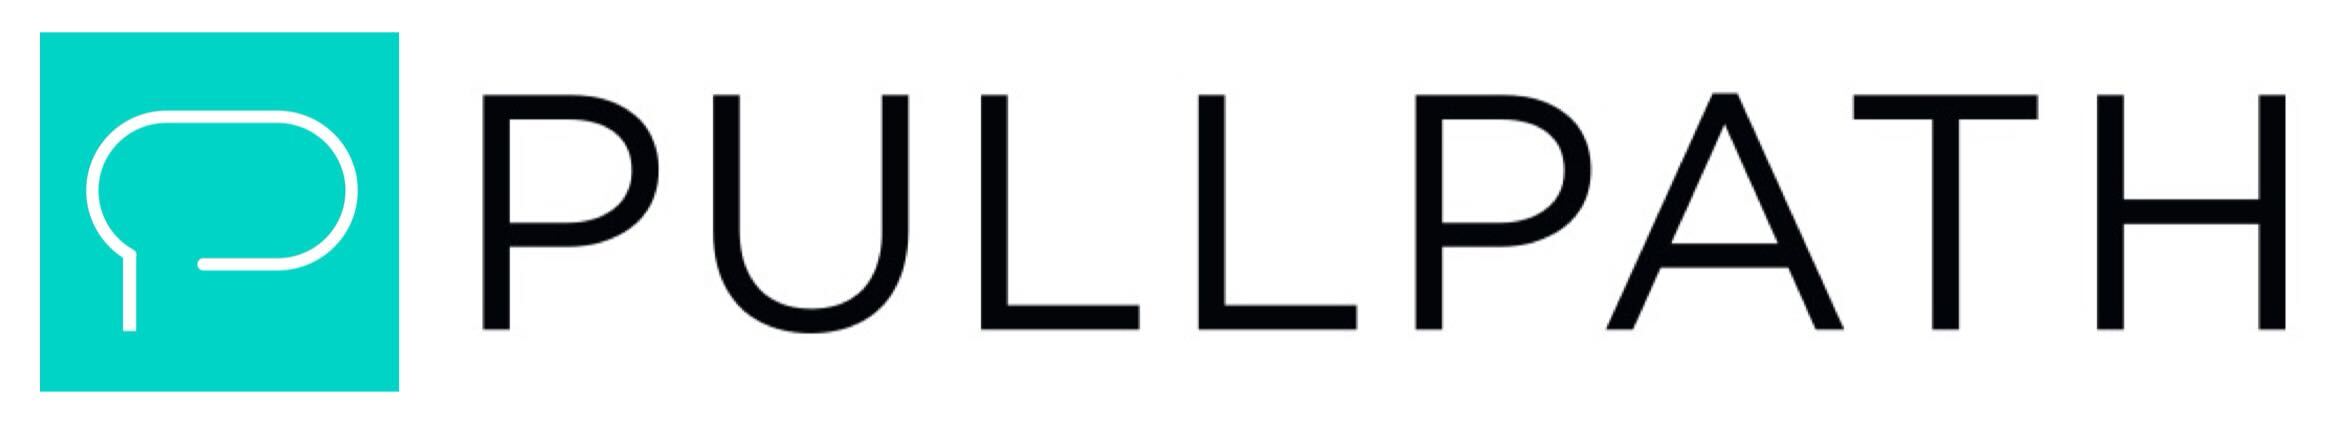 PullPath logo